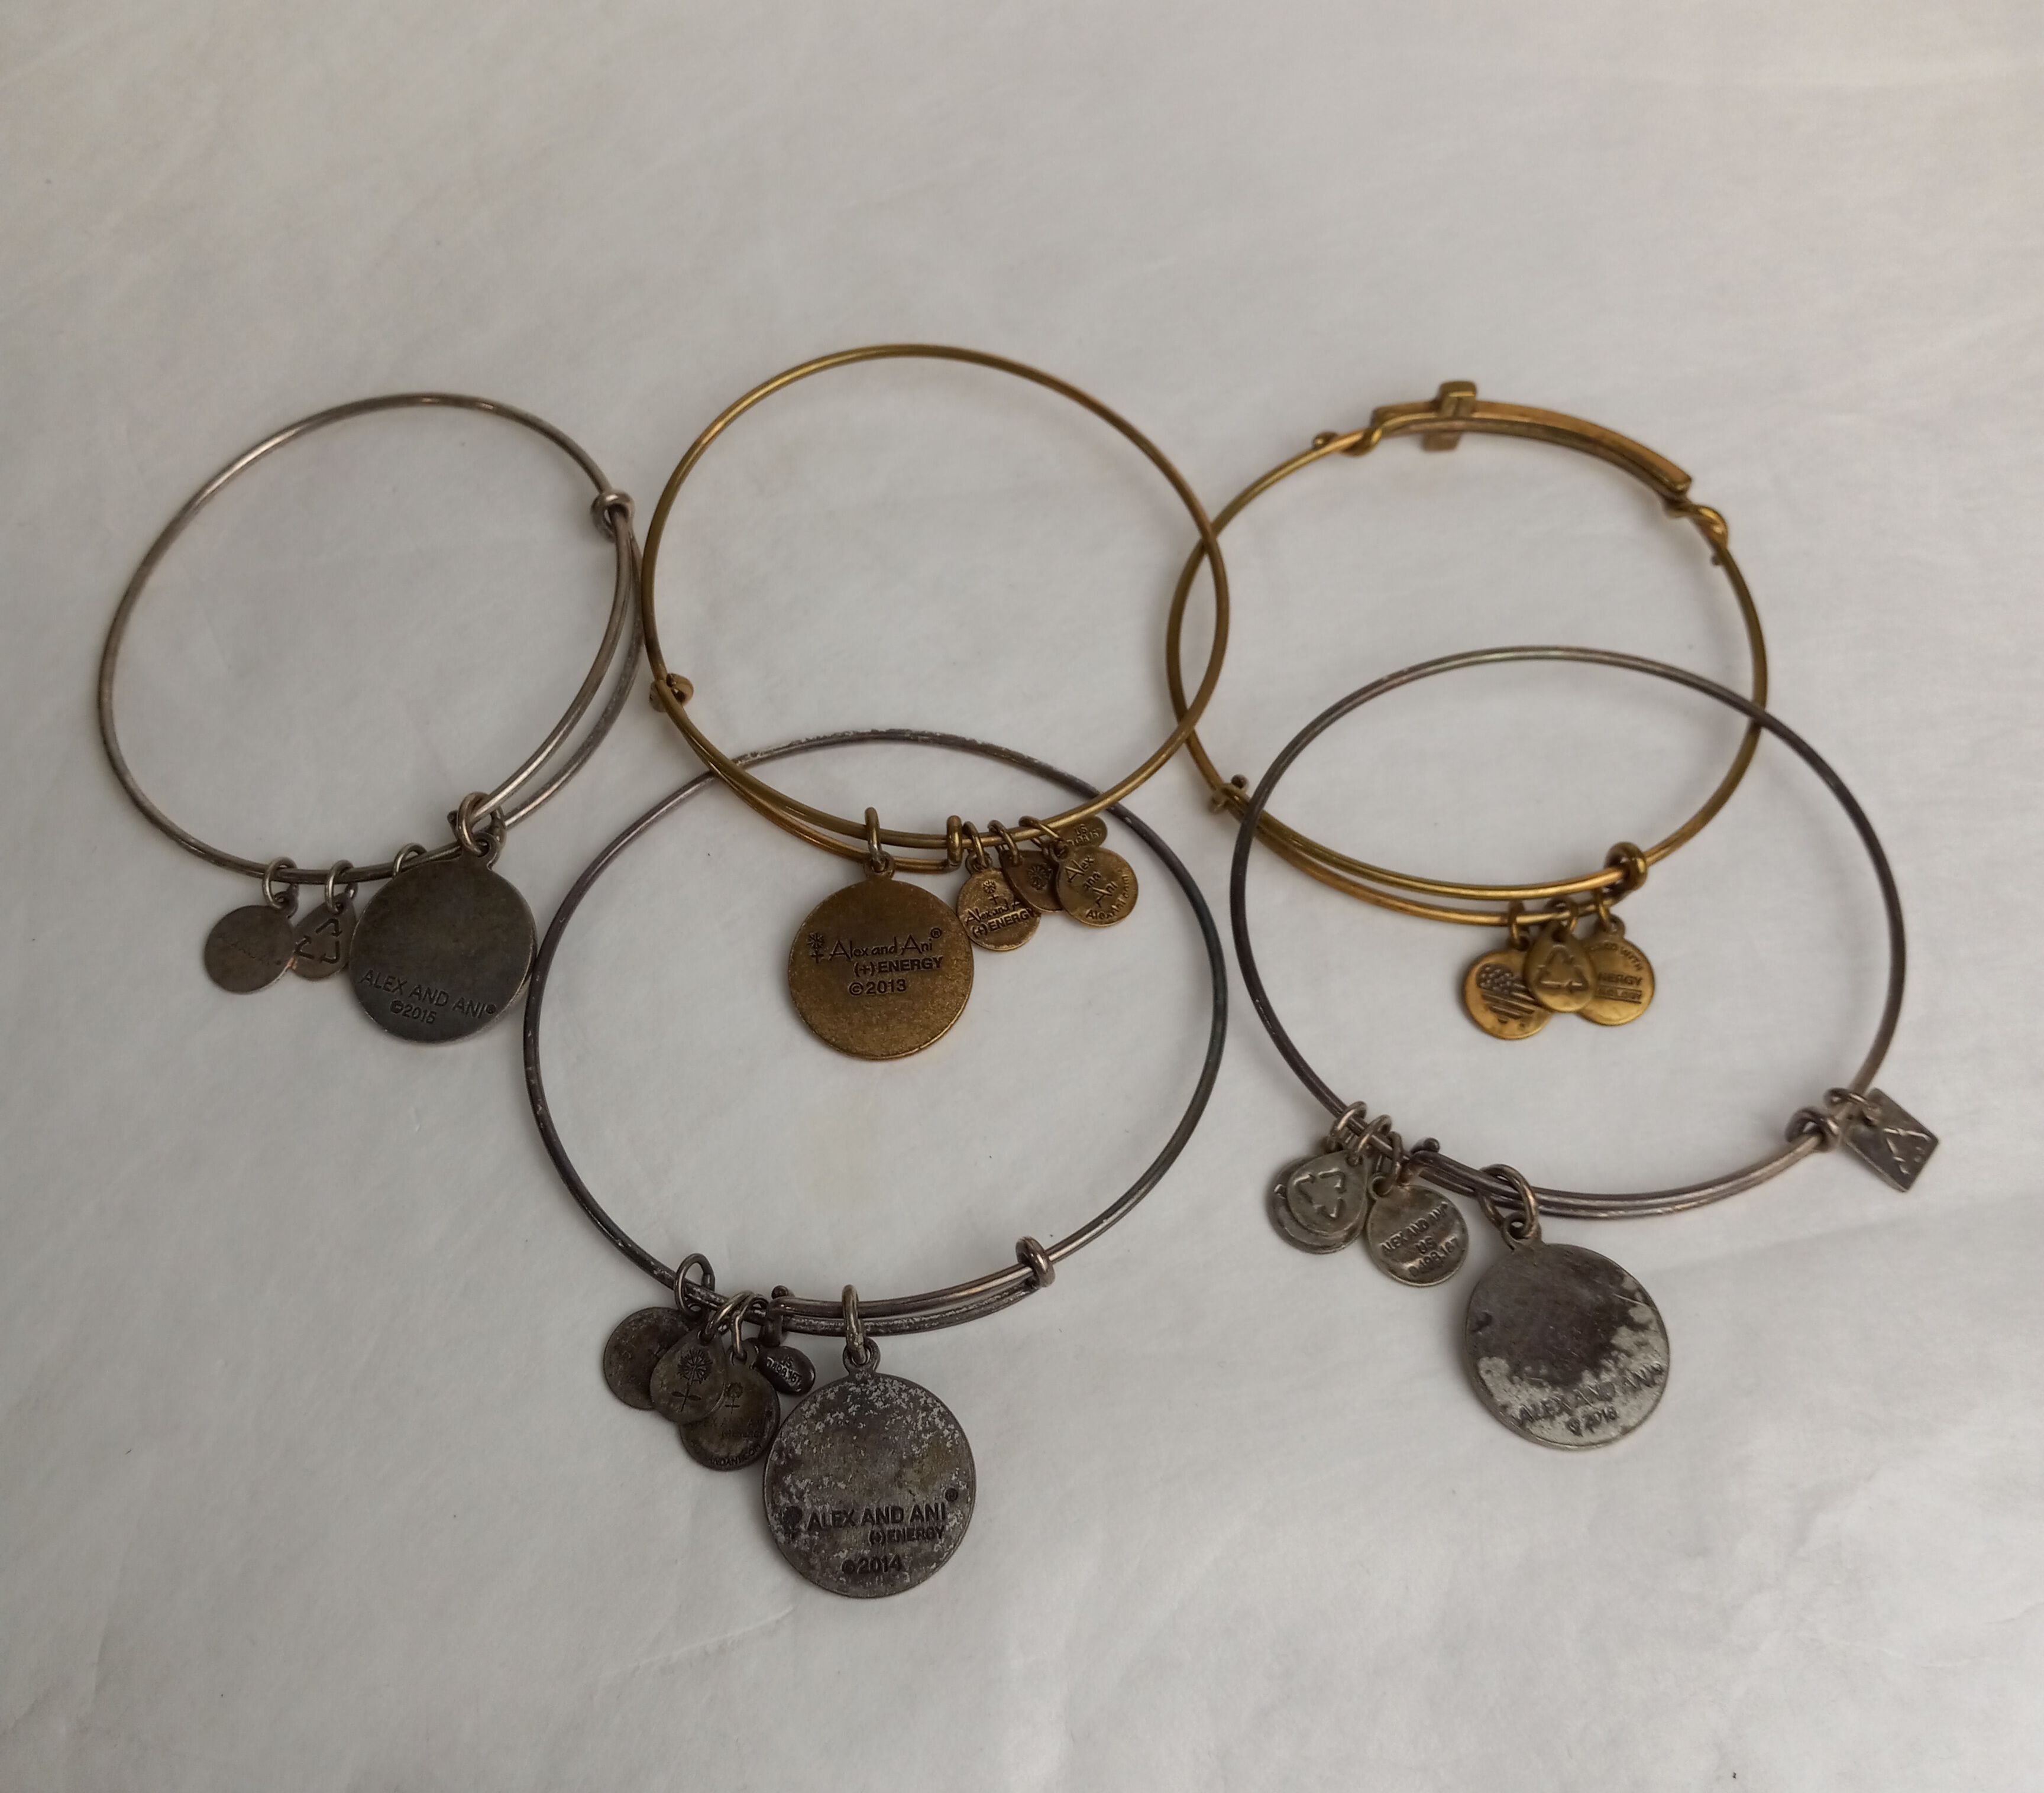 Religious Symbols Alex and Ani Bracelets  FREE SHIPPING  Jewelry